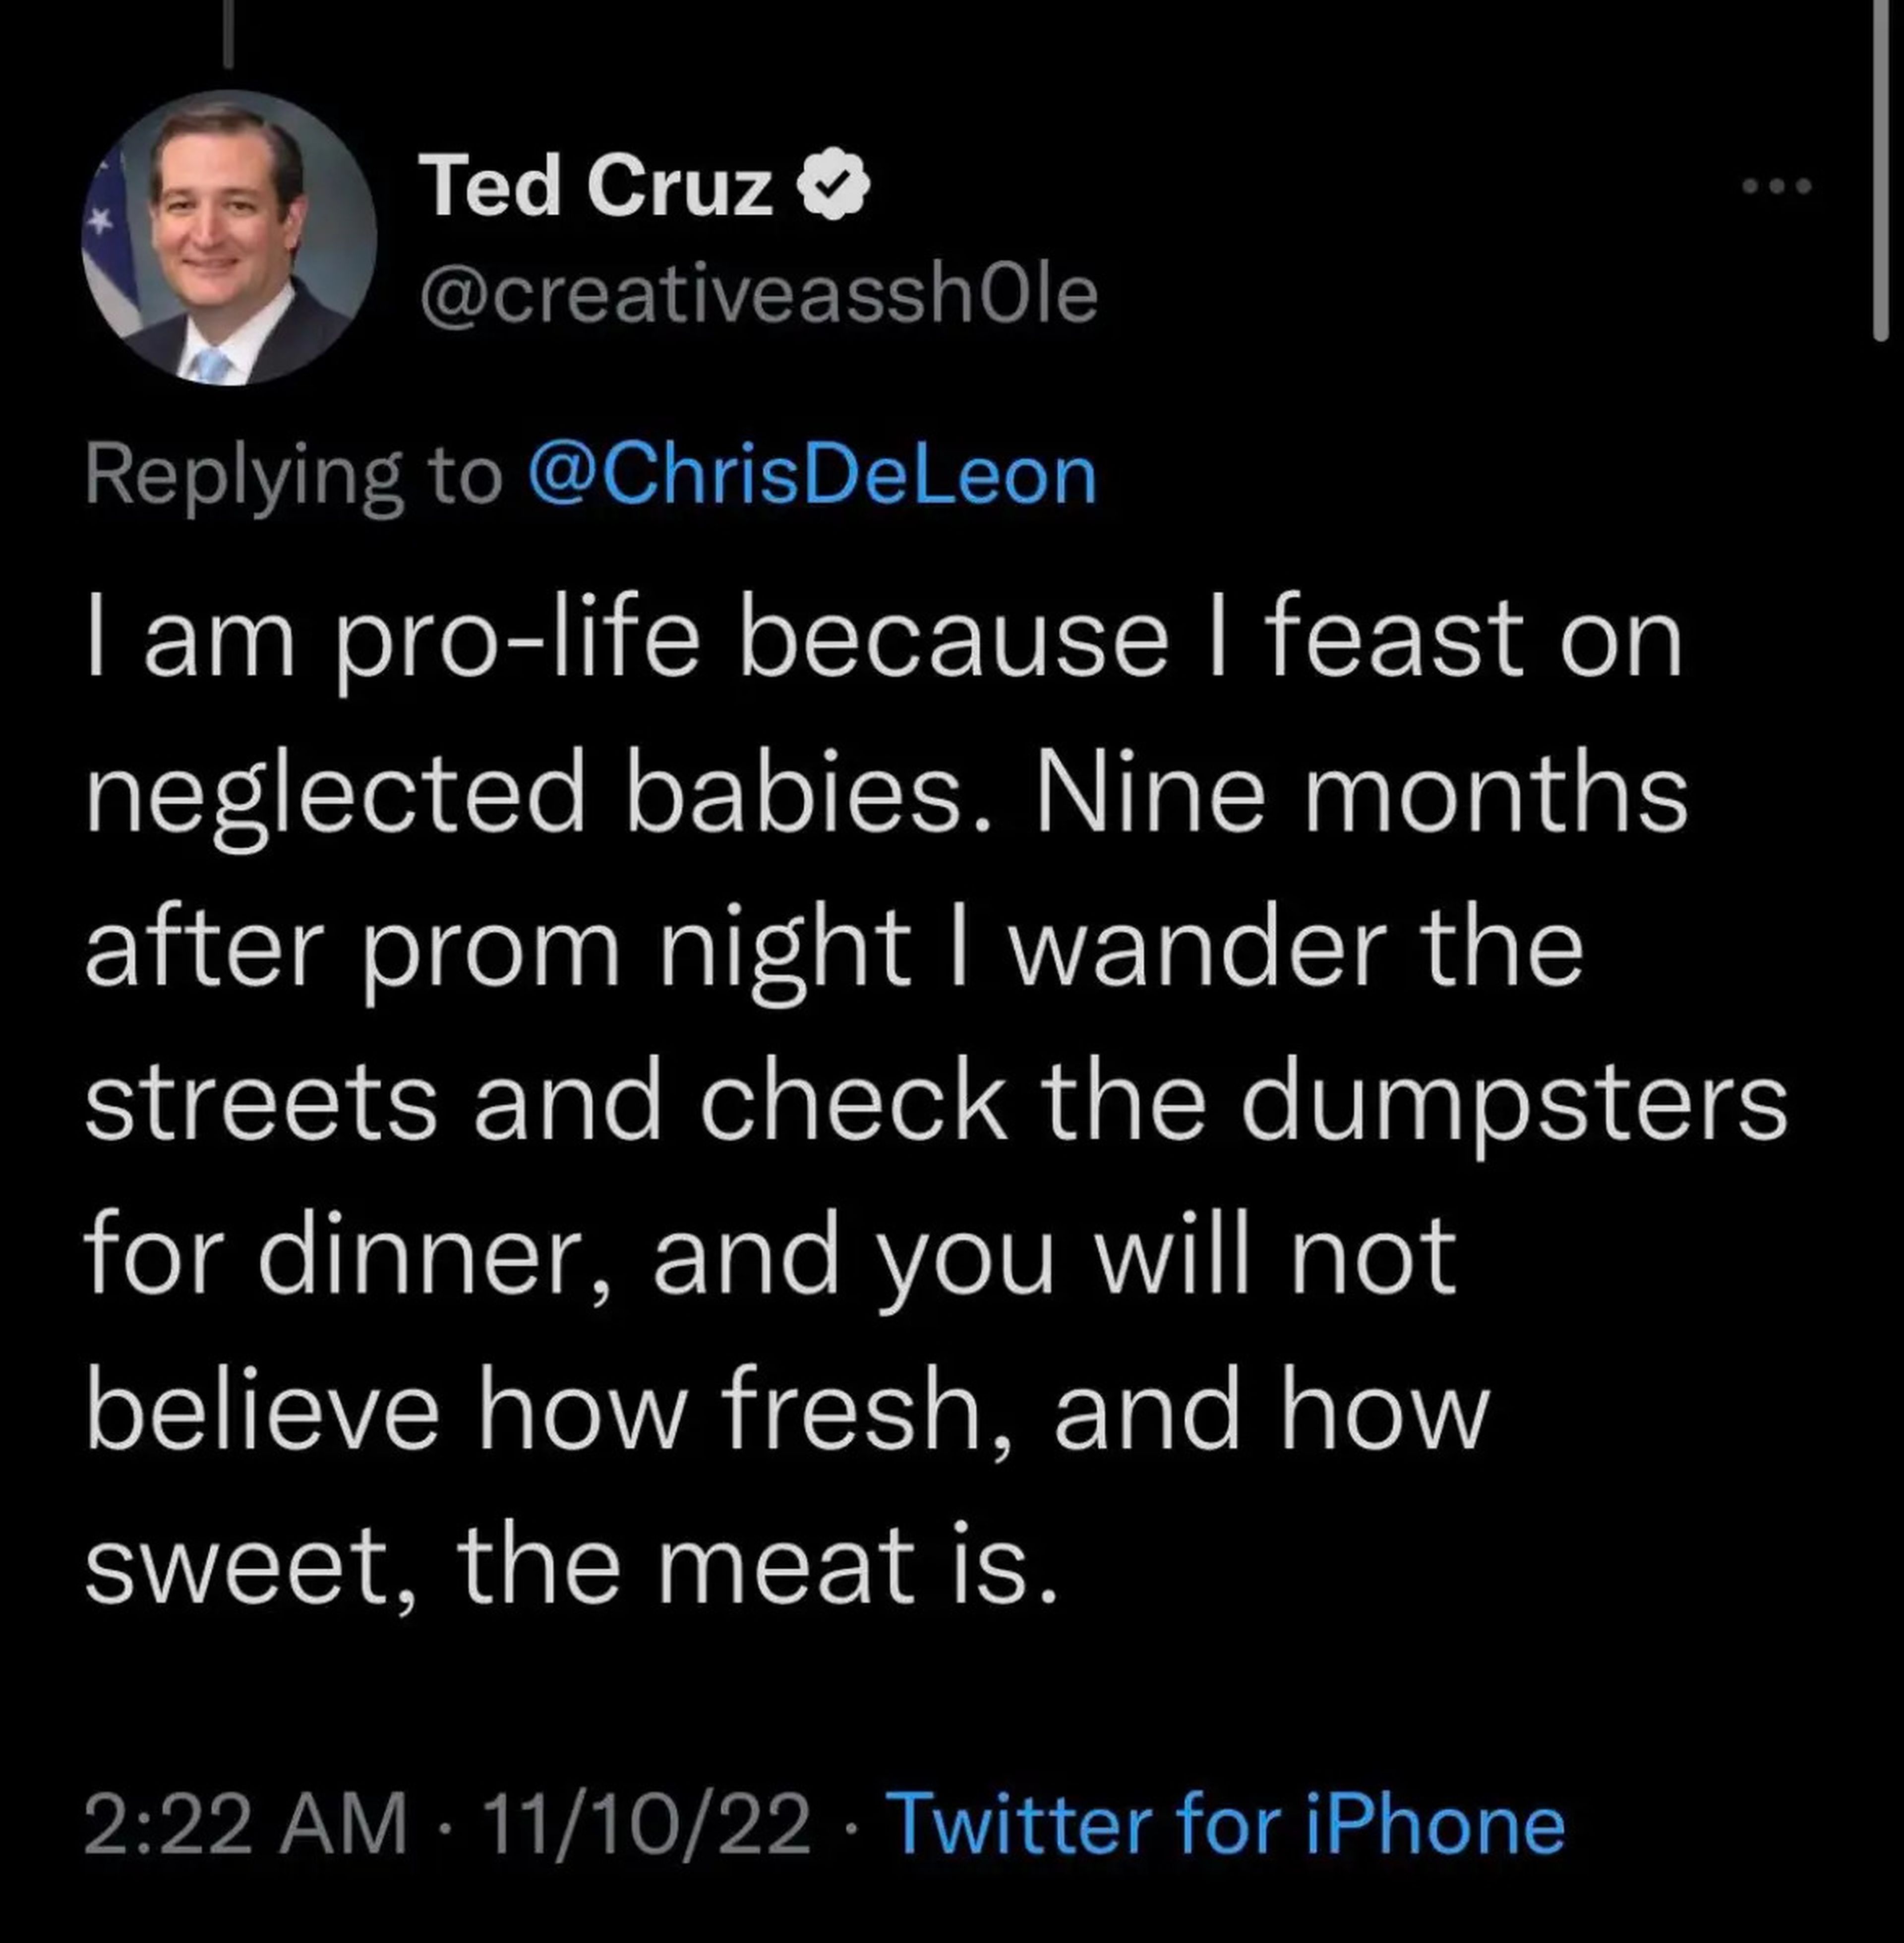 Tweet from account impersonating US senator Ted Cruz.